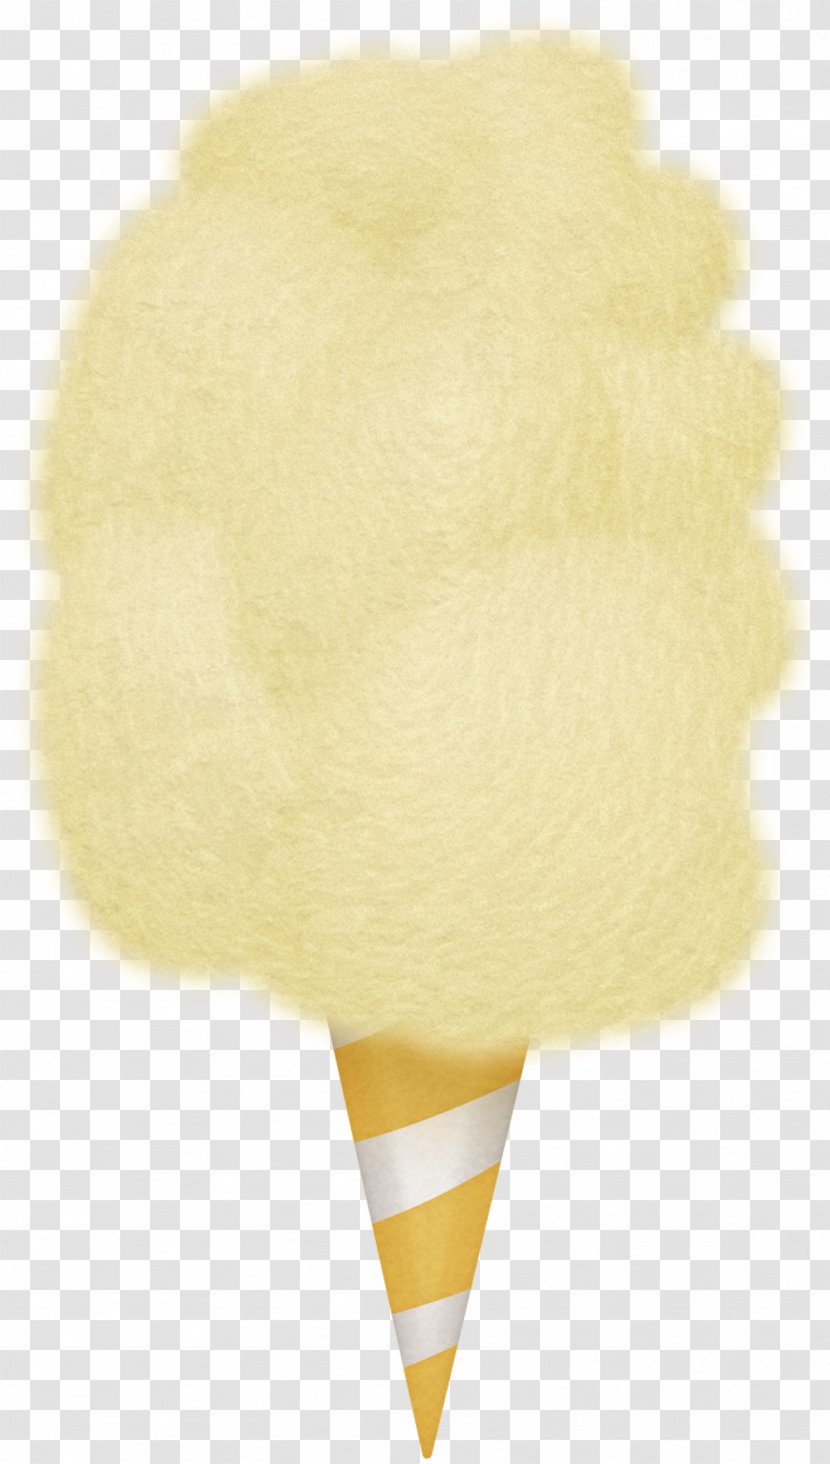 Cotton Candy Ice Cream Cone - Gratis Transparent PNG